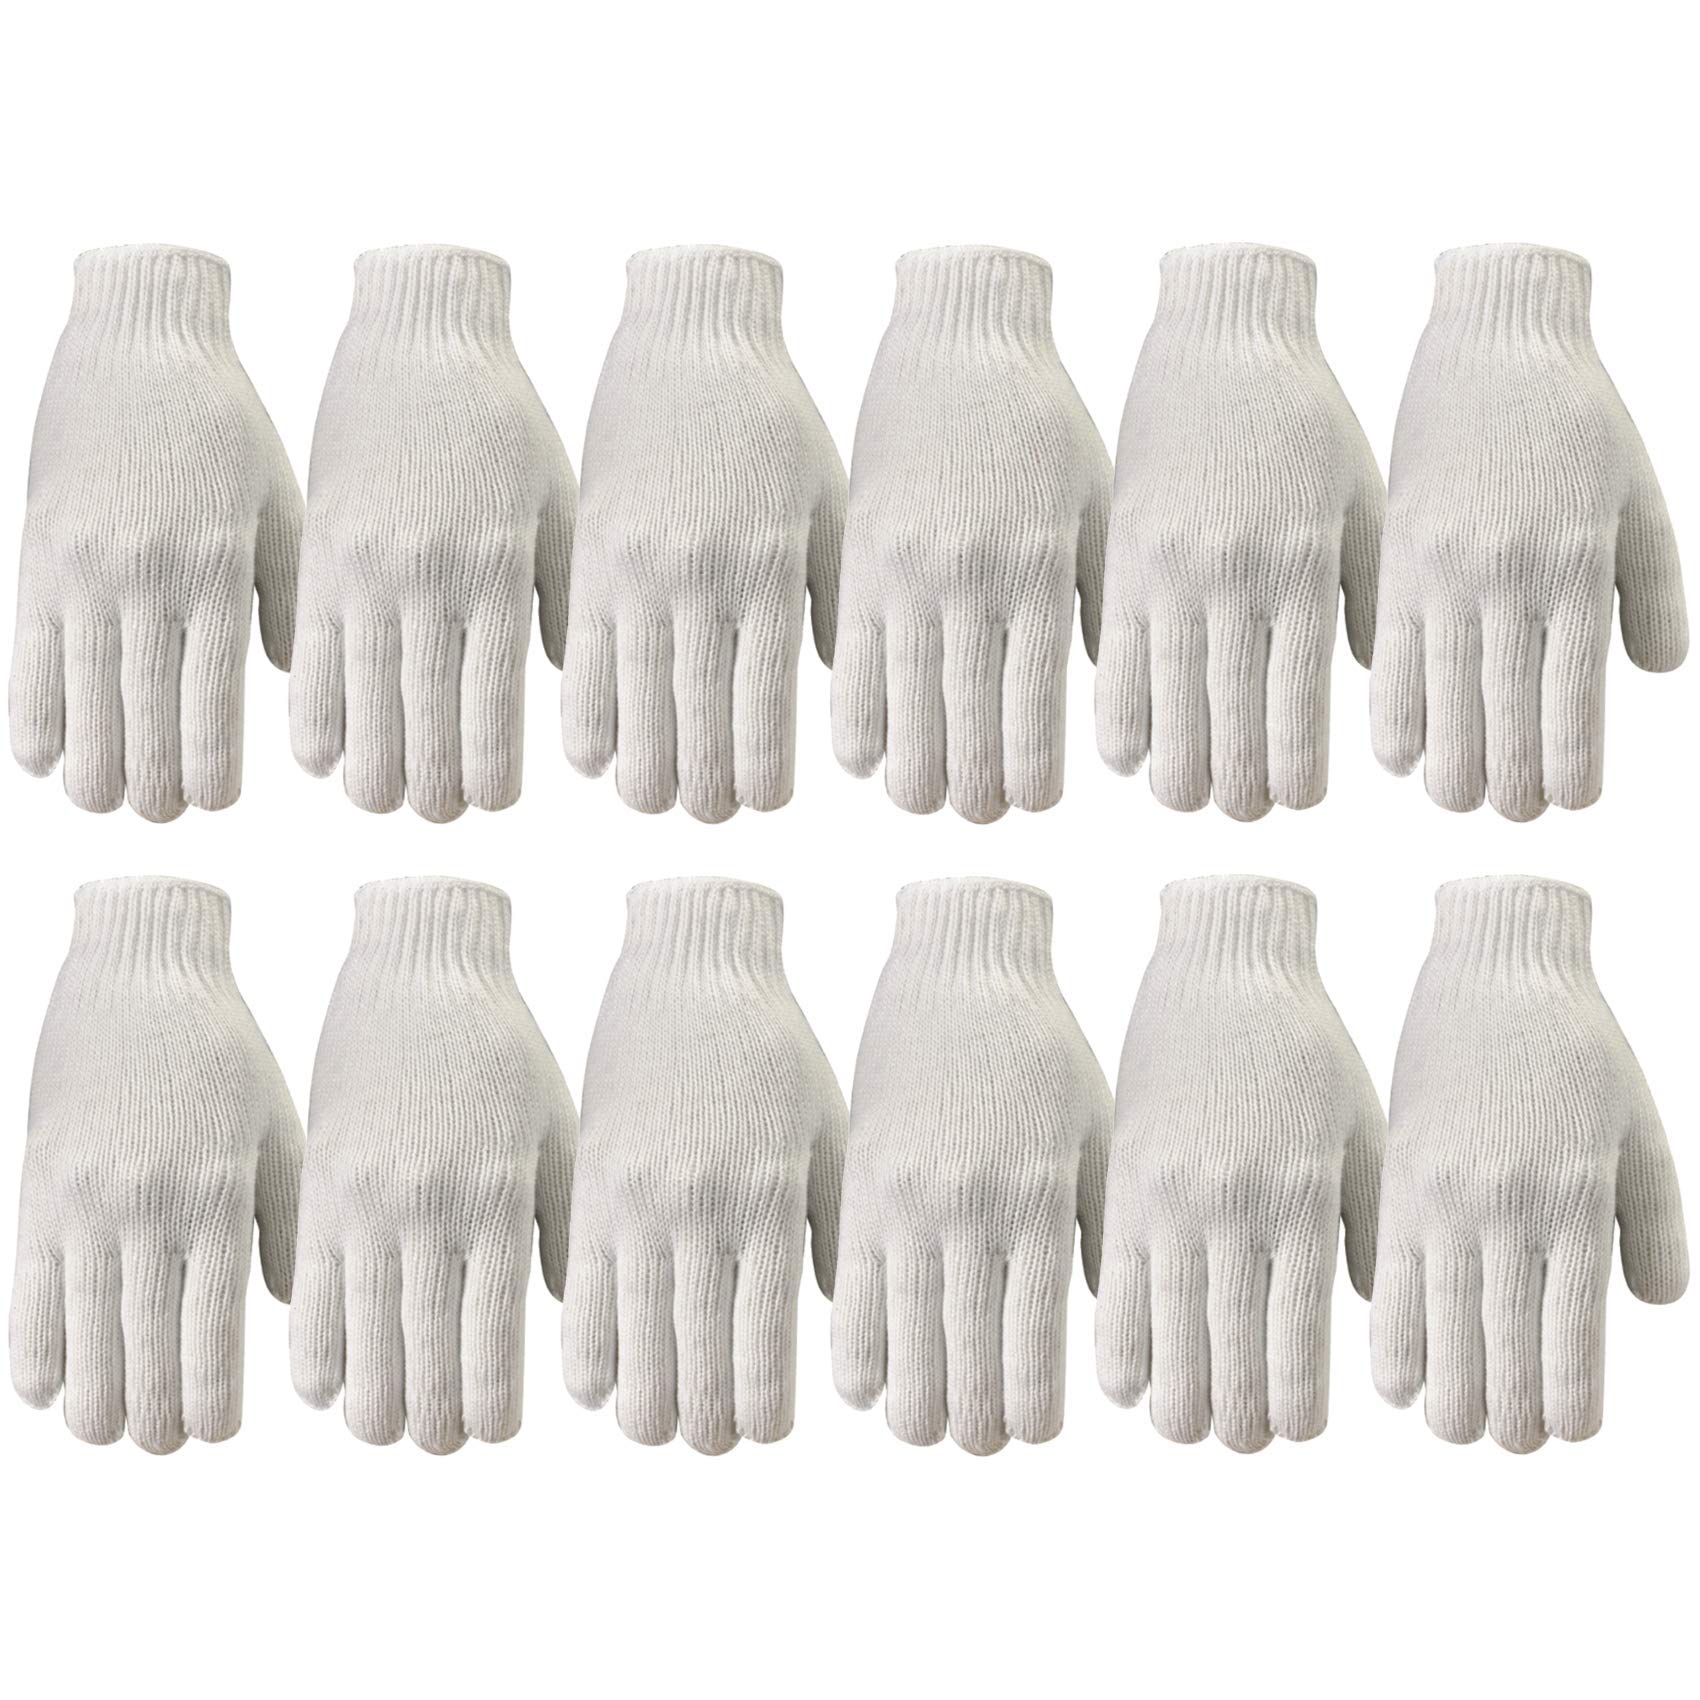 12-Pack Wells Lamont Men's Work Gloves (Medium, White) $4.10 + Free Shipping w/ Prime or on $35+